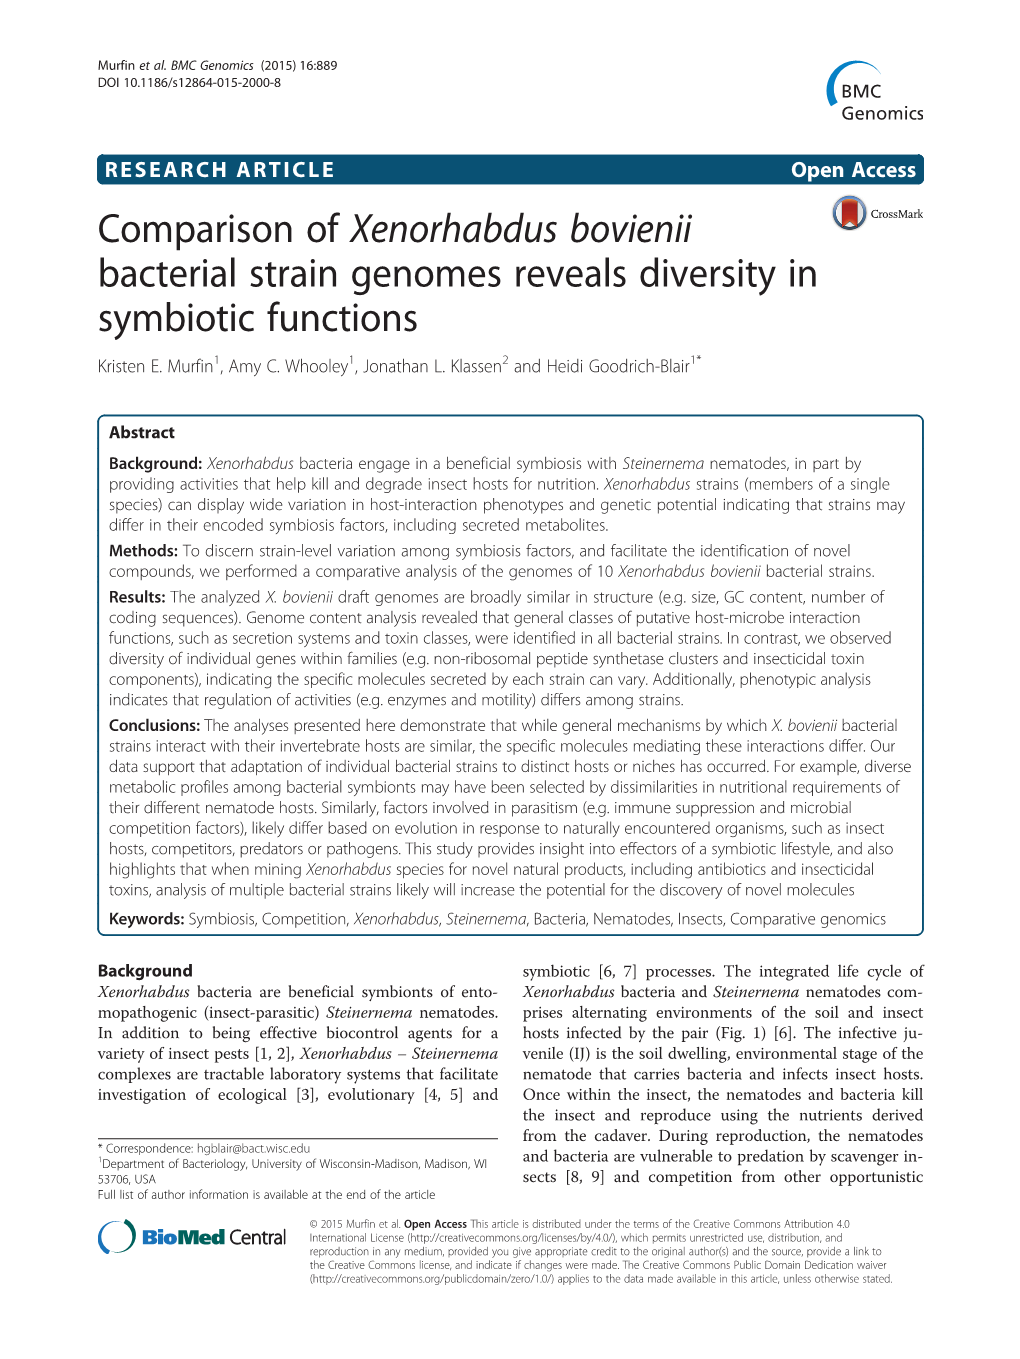 Comparison of Xenorhabdus Bovienii Bacterial Strain Genomes Reveals Diversity in Symbiotic Functions Kristen E